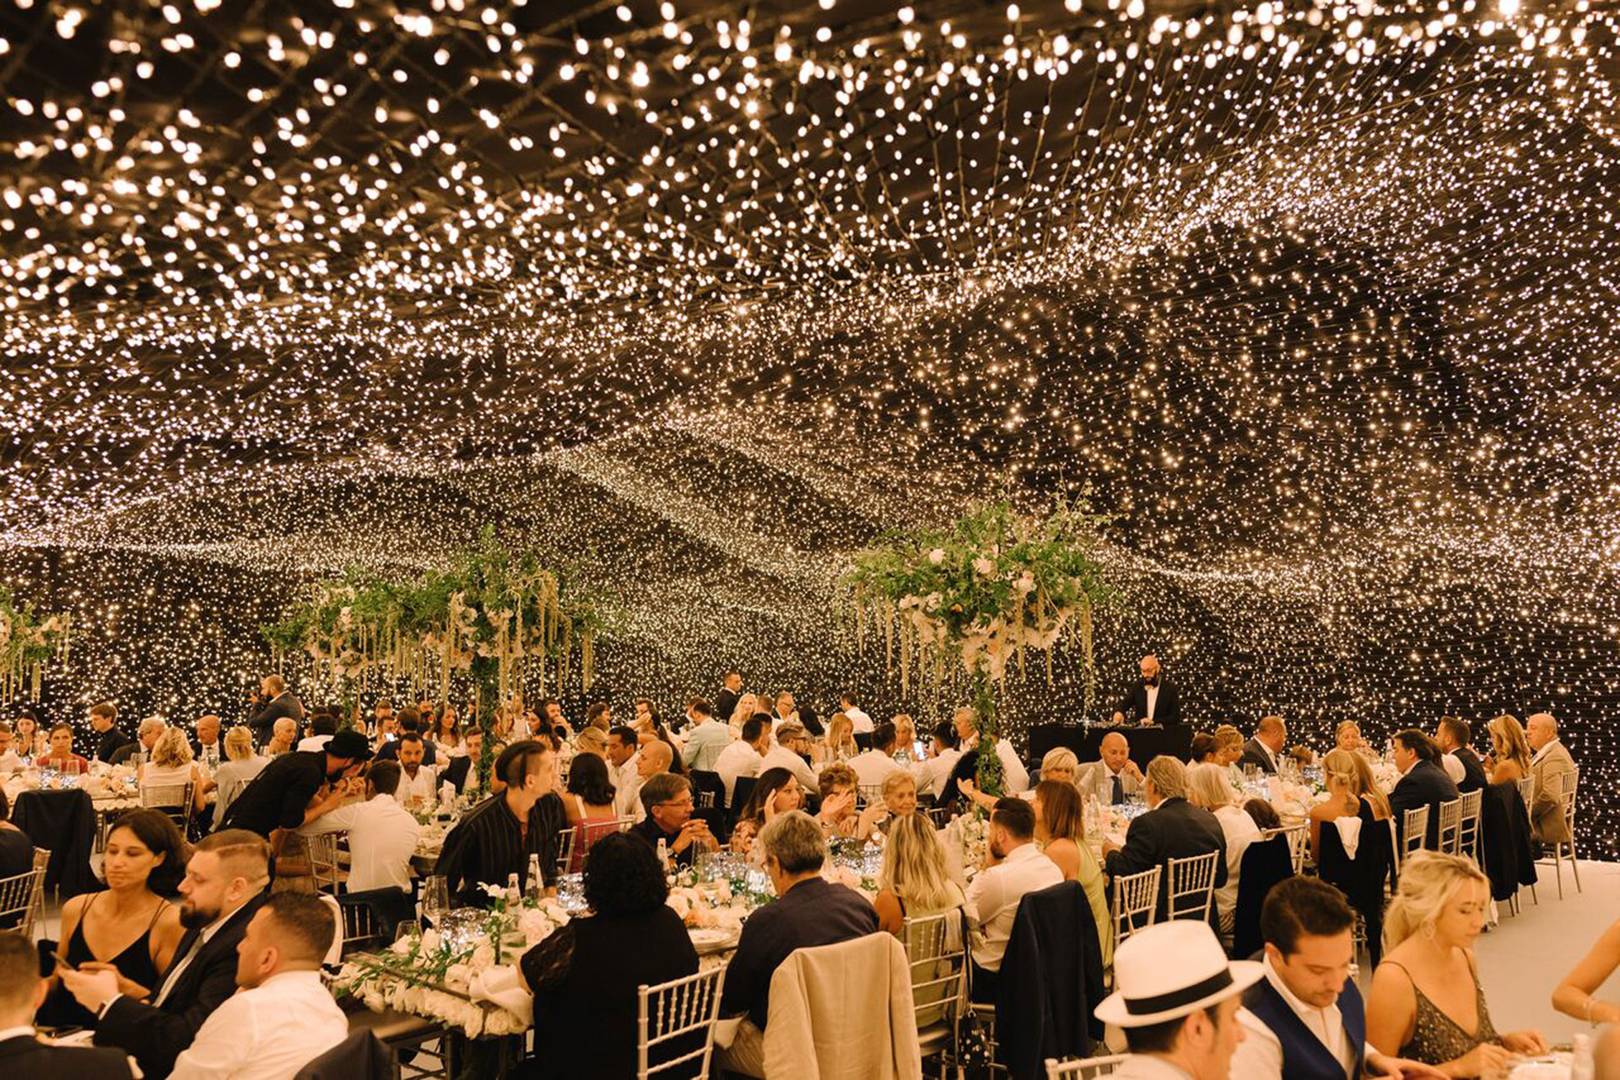 007-dinner-chiara-ferragni-wedding-vogue-int-credit-david-bastianoni.jpg